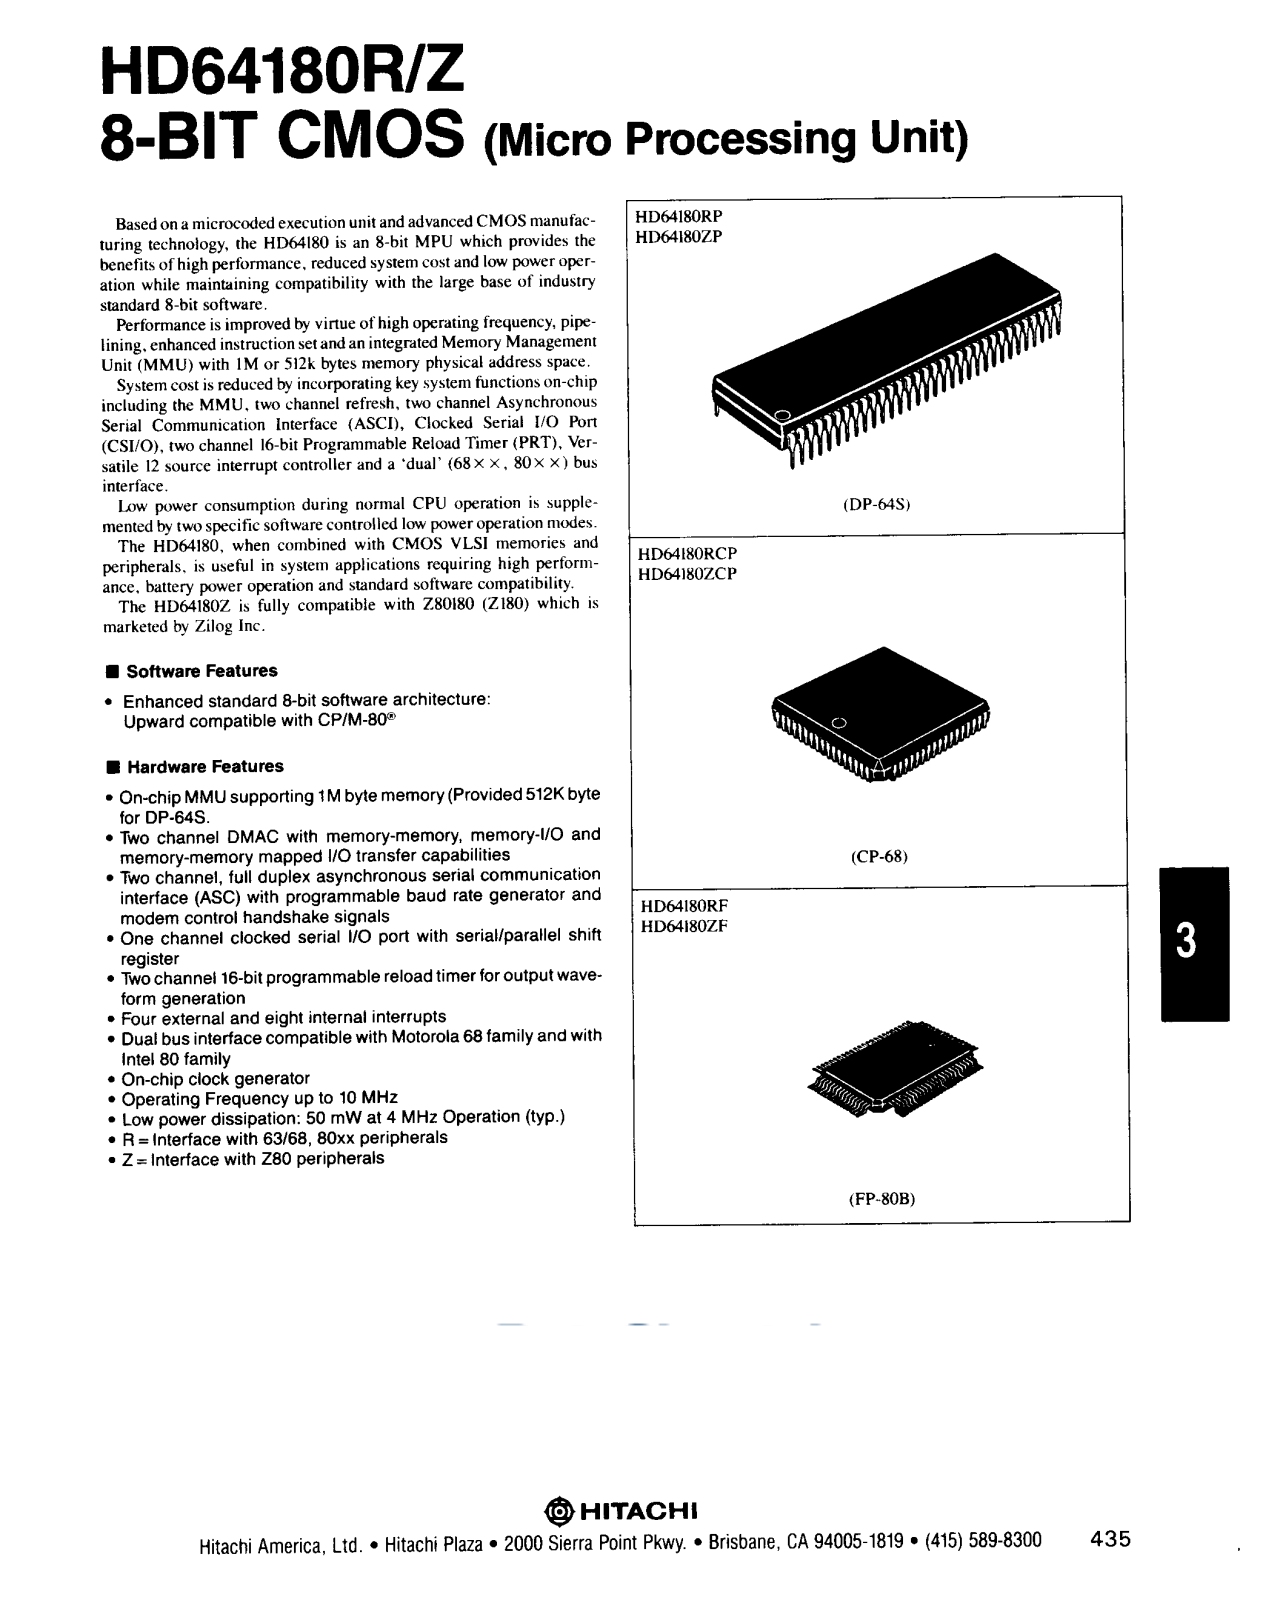 HITACHI hd64180R, hd64180Z User Manual